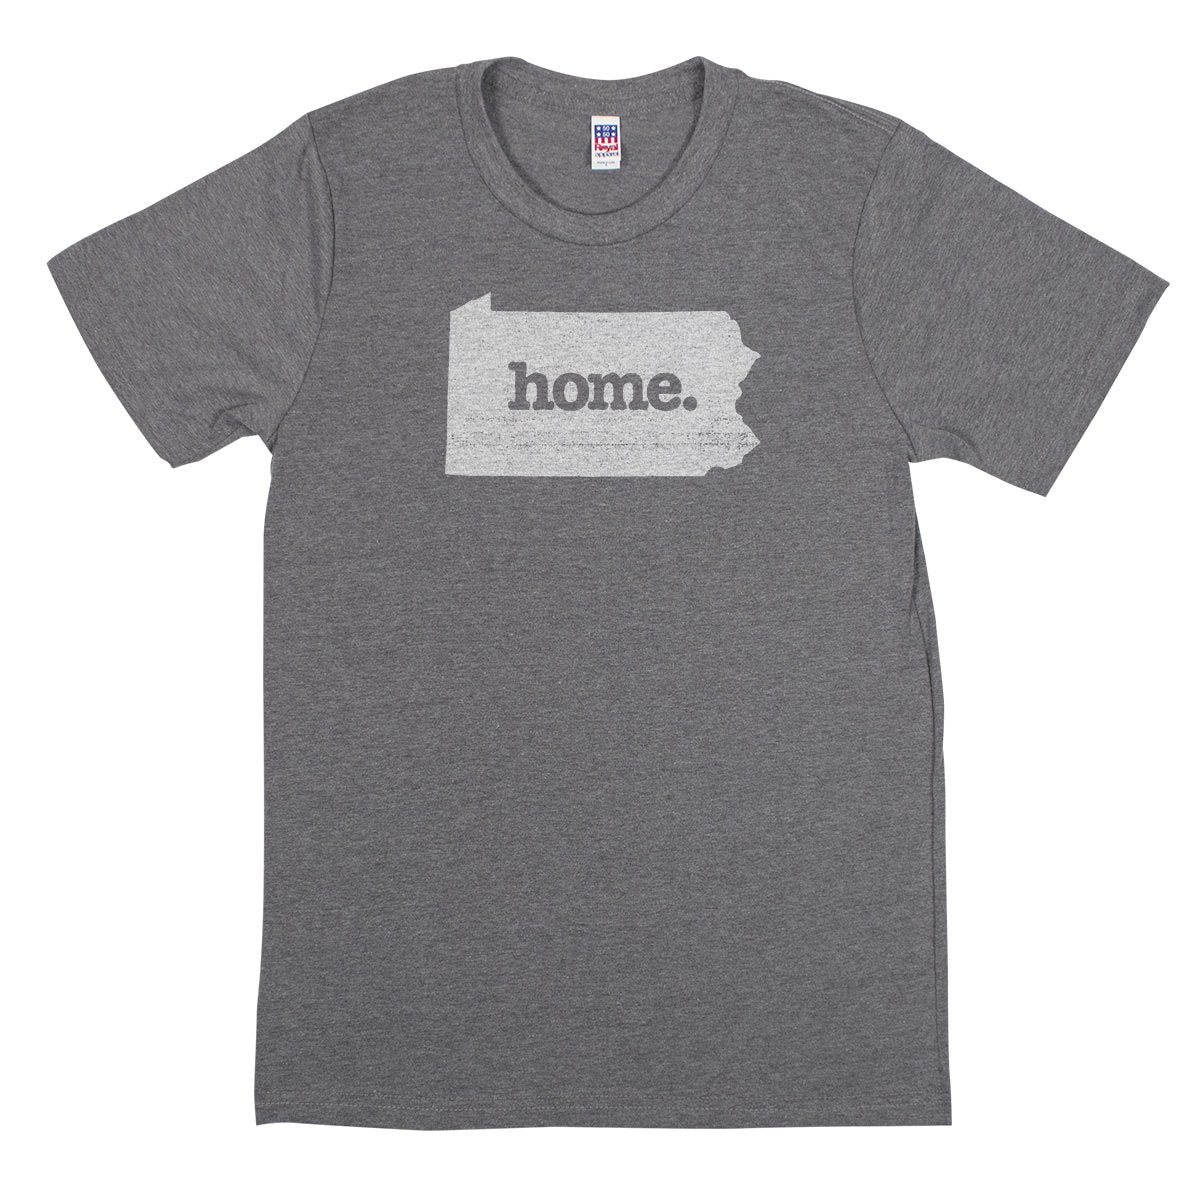 home. Men’s Unisex T-Shirt - California